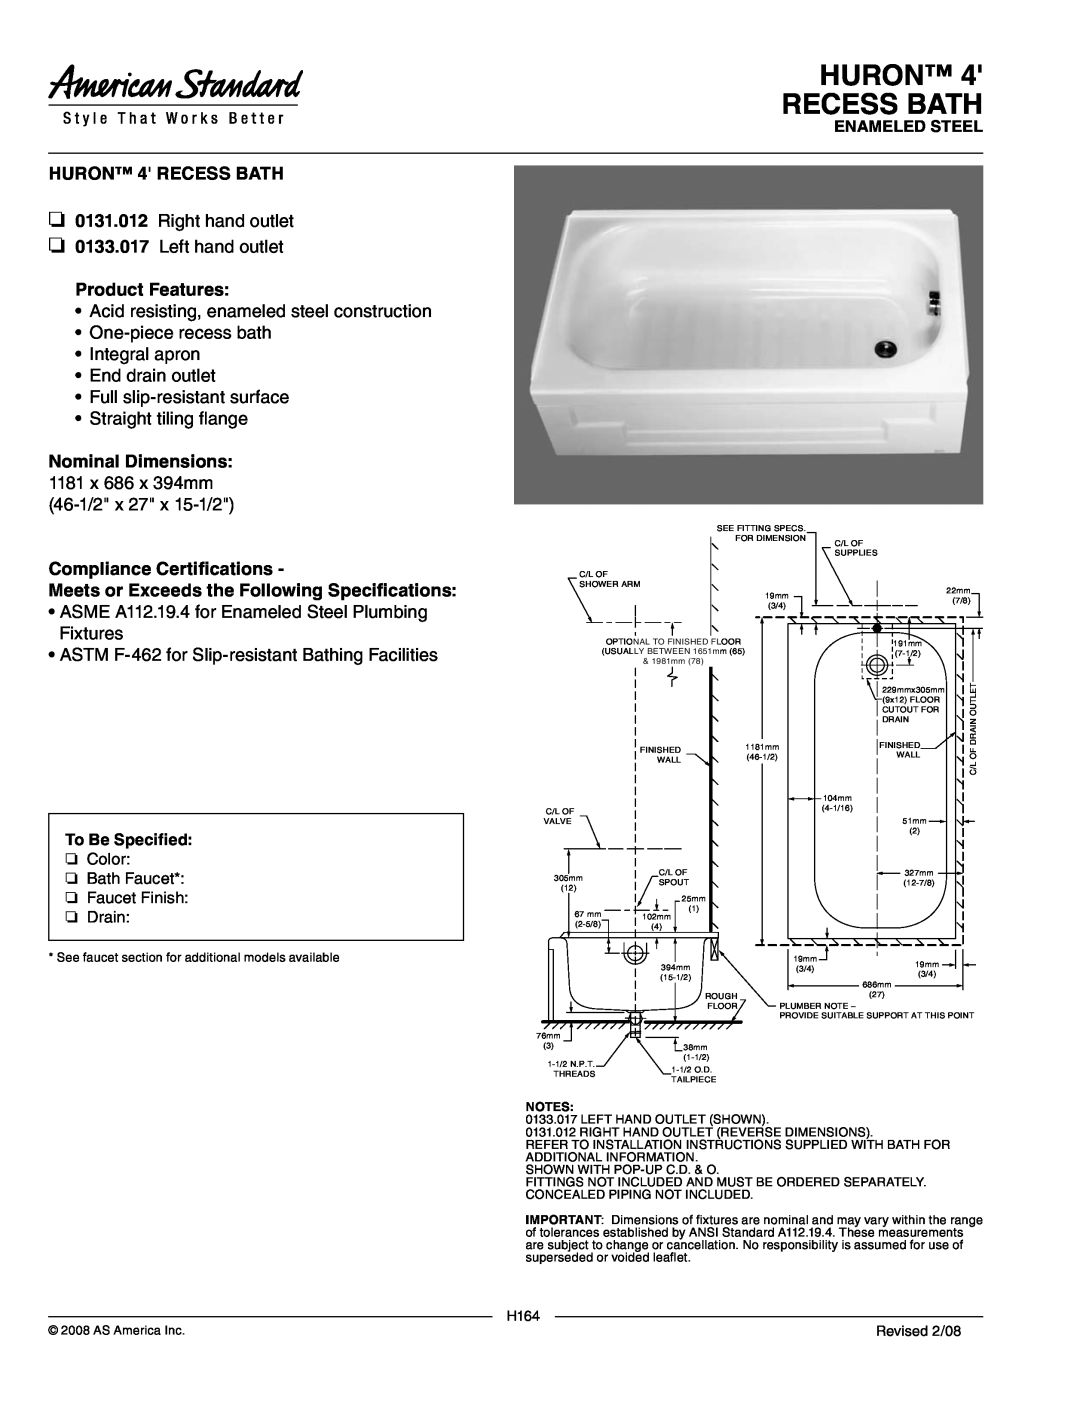 American Standard 0133.017 dimensions Huron Recess Bath, HURON 4 RECESS BATH, Right hand outlet, Left hand outlet, H164 